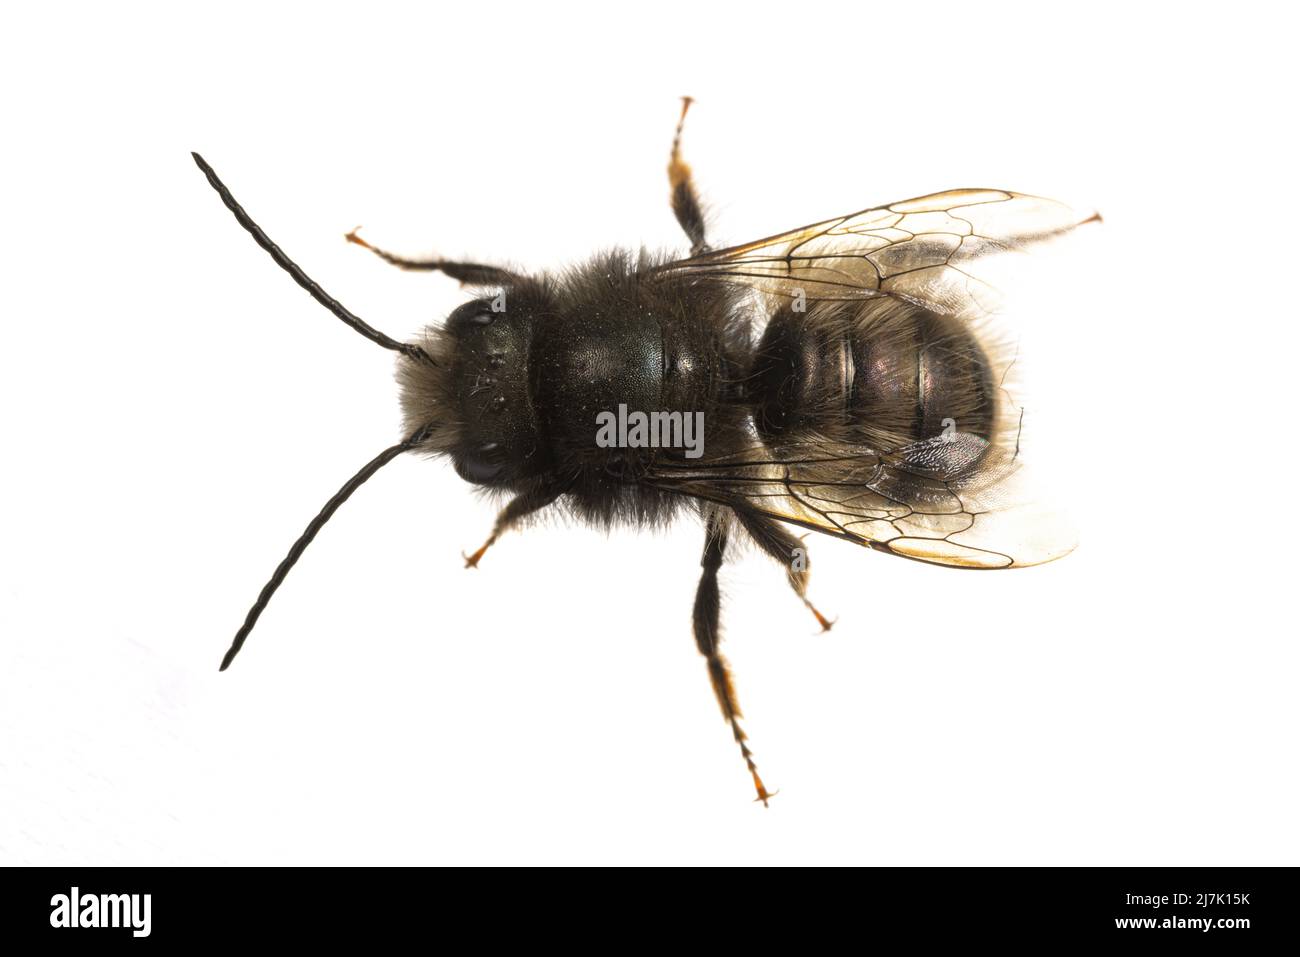 Insectos de europa - abejas: Vista superior de la abeja huerta europea de Osmia cornuta macho (Gehoernte Mauerbiene alemán) aislado sobre fondo blanco Foto de stock